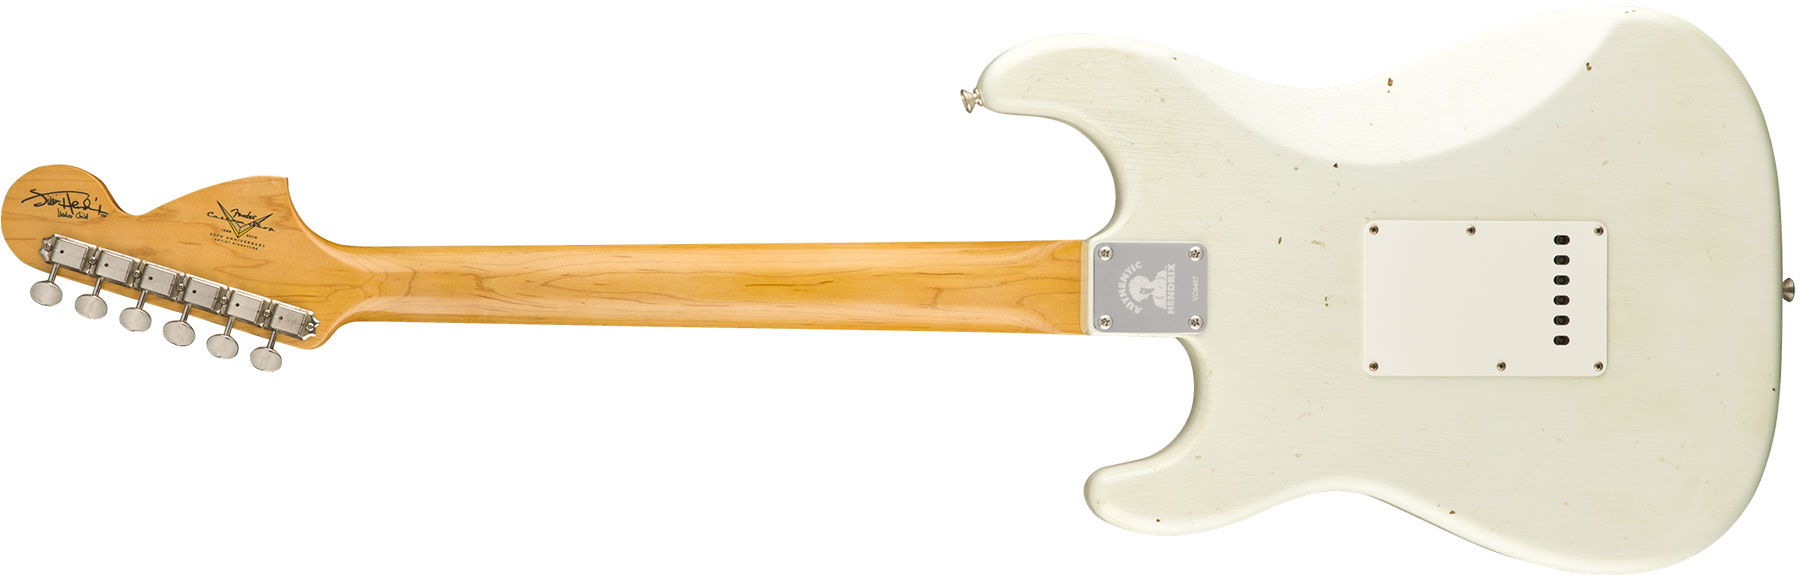 Fender Custom Shop Jimi Hendrix Strat Voodoo Child Signature 2018 Mn - Journeyman Relic Olympic White - Guitare Électrique Forme Str - Variation 1